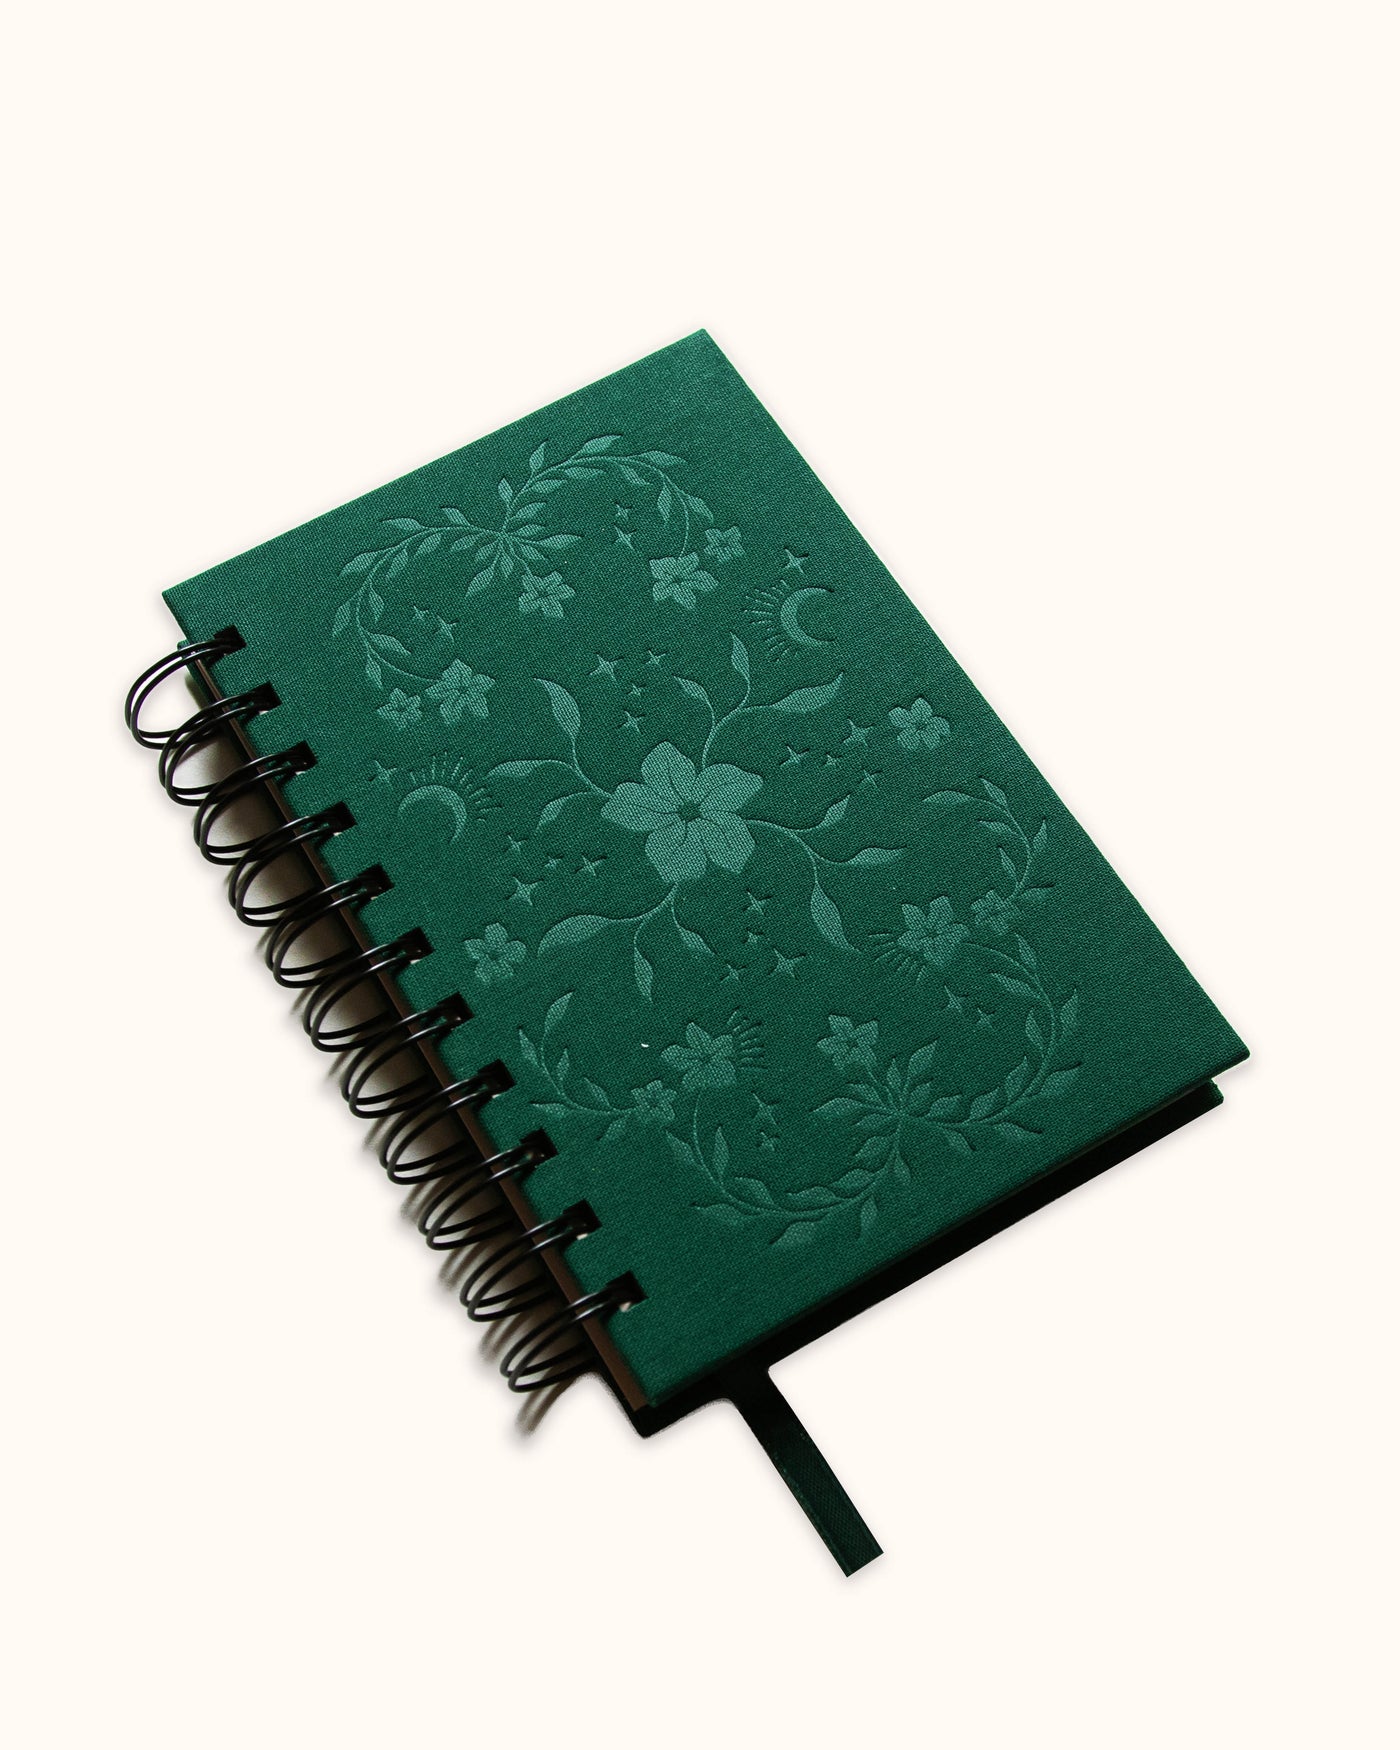 Botanical Spiral Bound Notebook - Wholesale